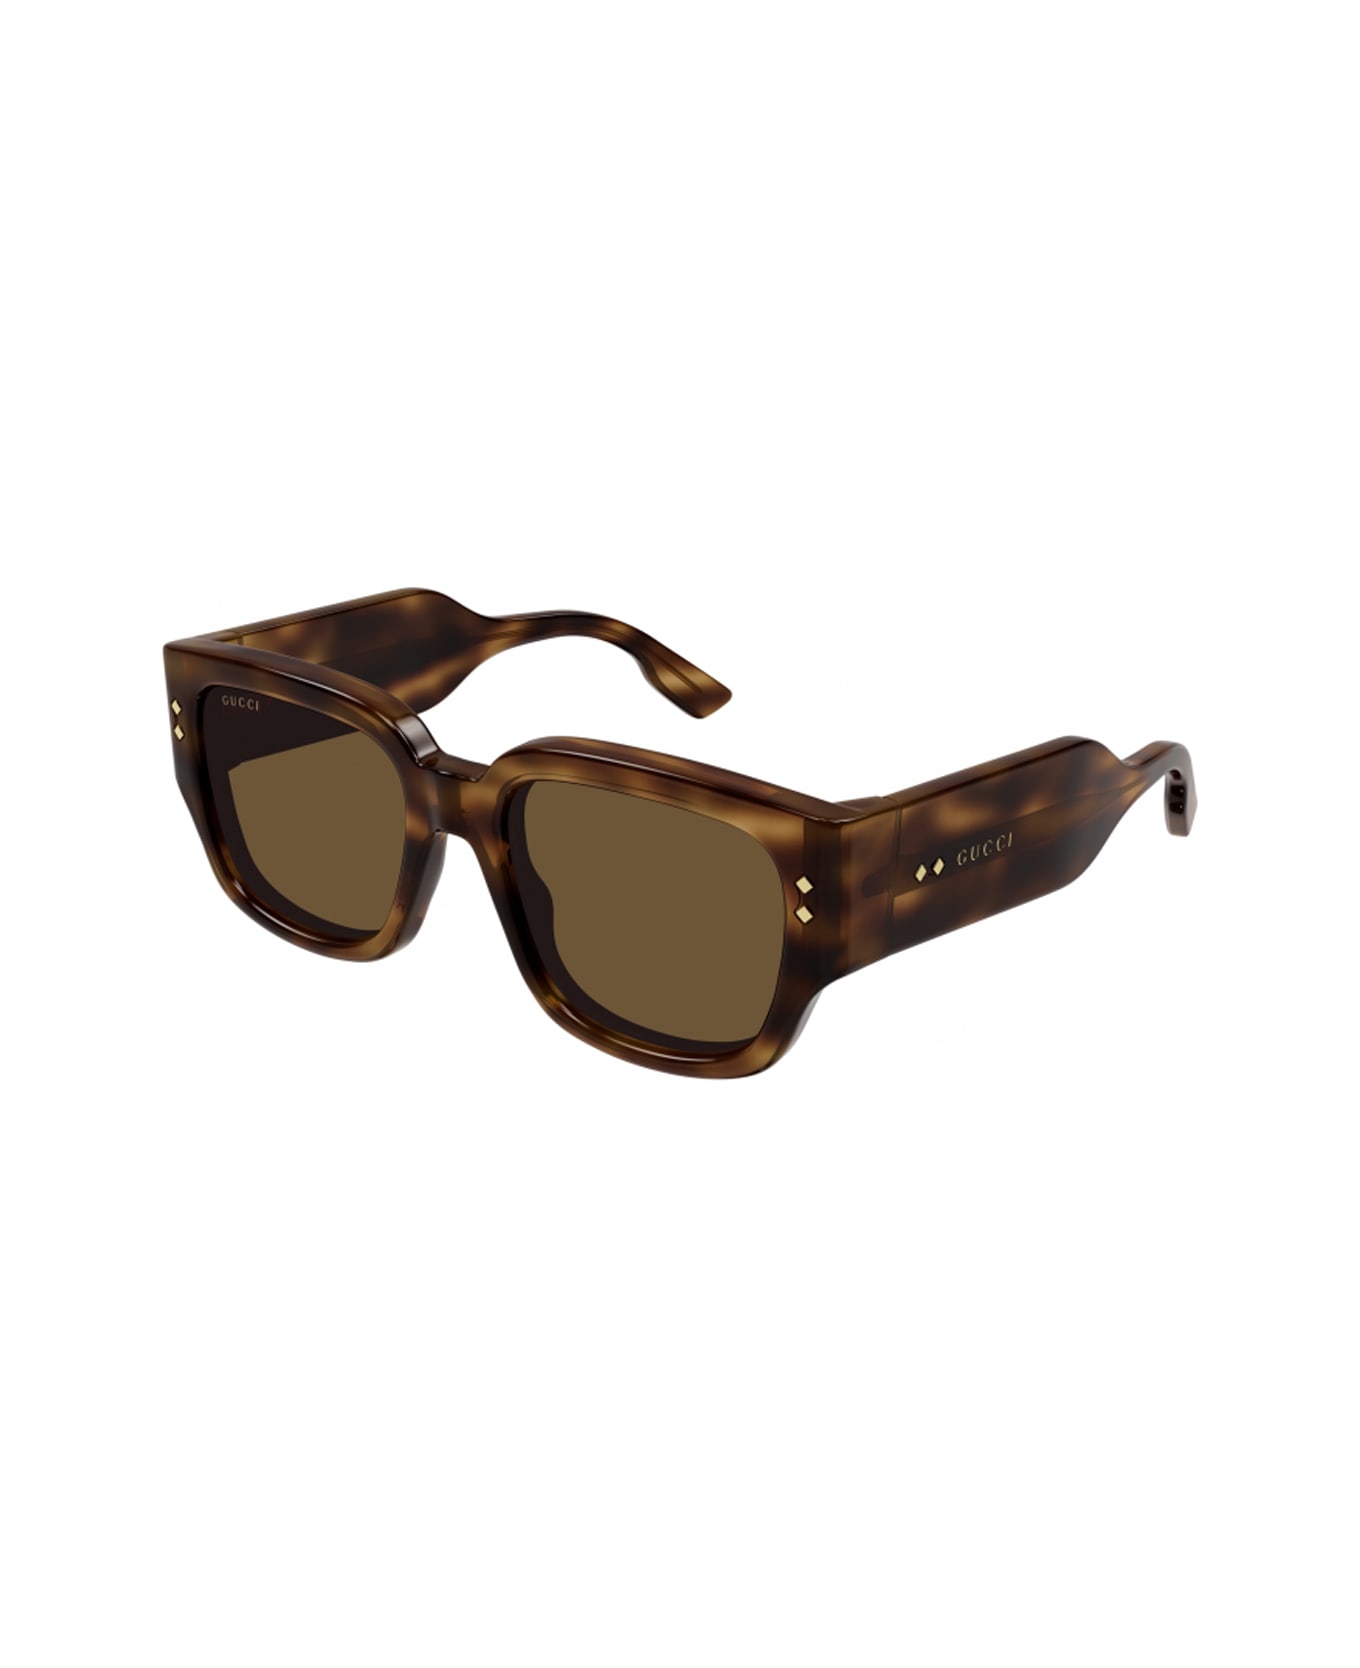 Gucci Eyewear Gg1261s Sunglasses Sunglasses - 002 HAVANA HAVANA BROWN